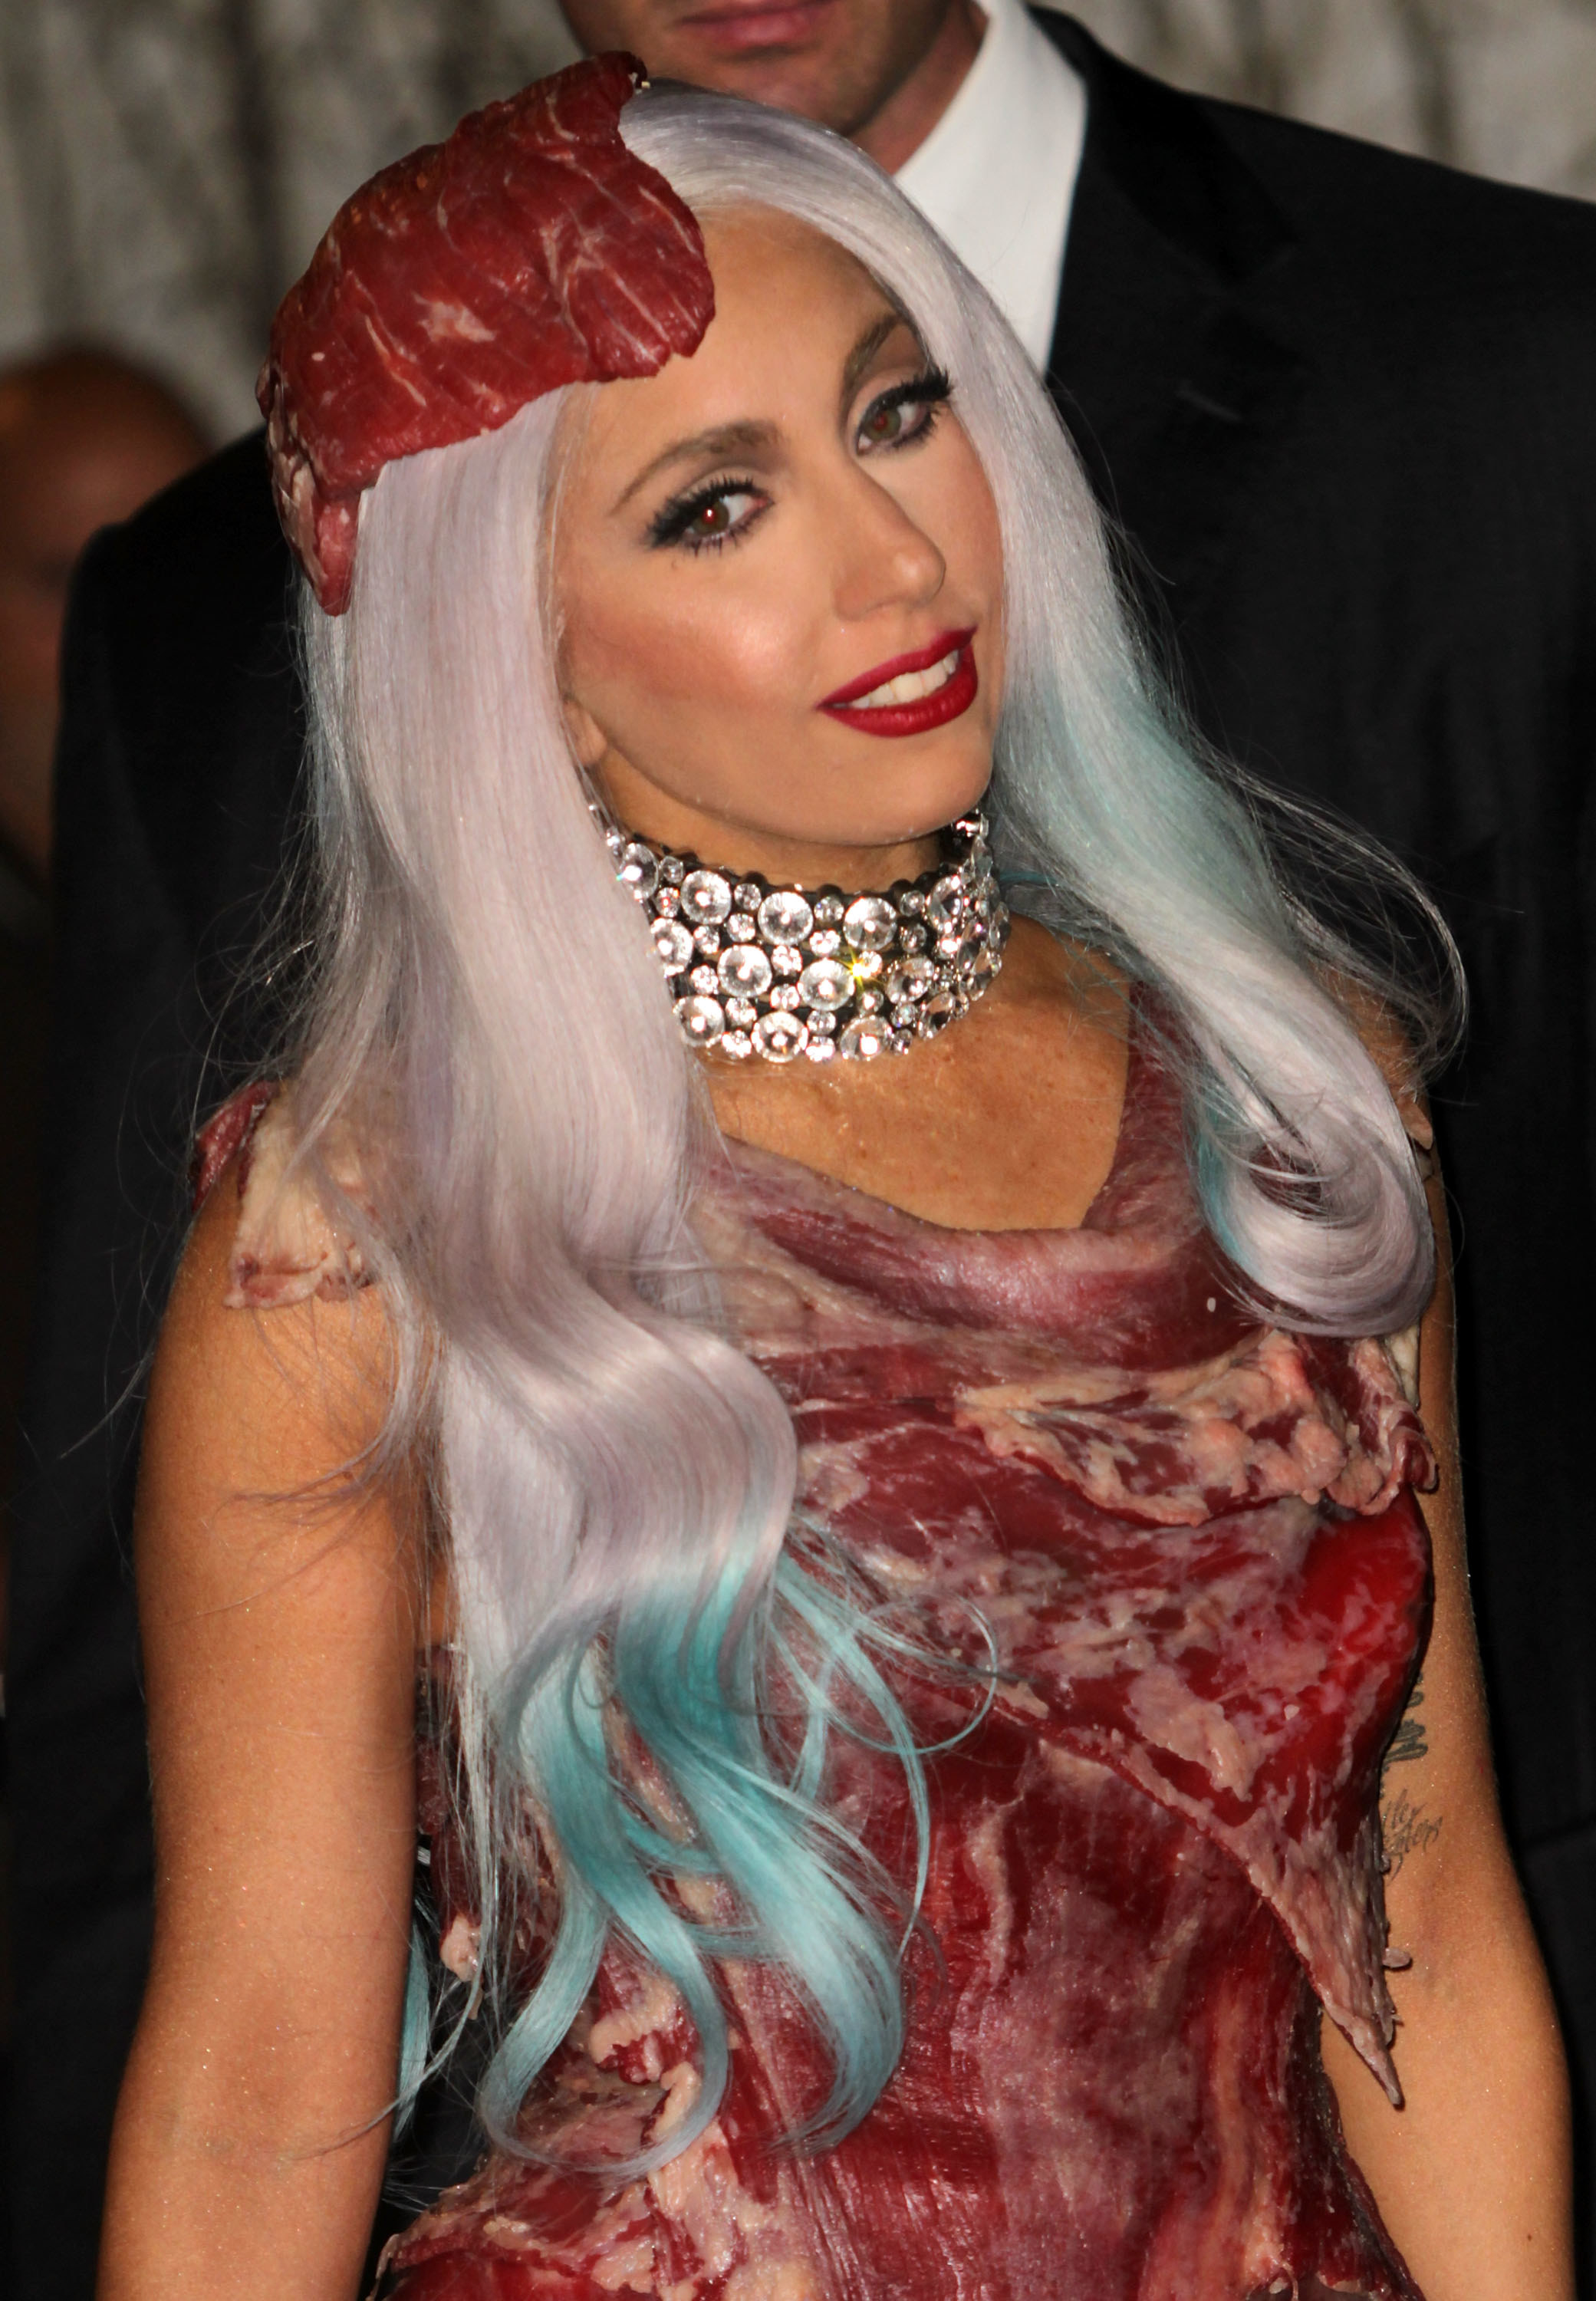 Gaga meat dress shocks MTV video awards - ABC News